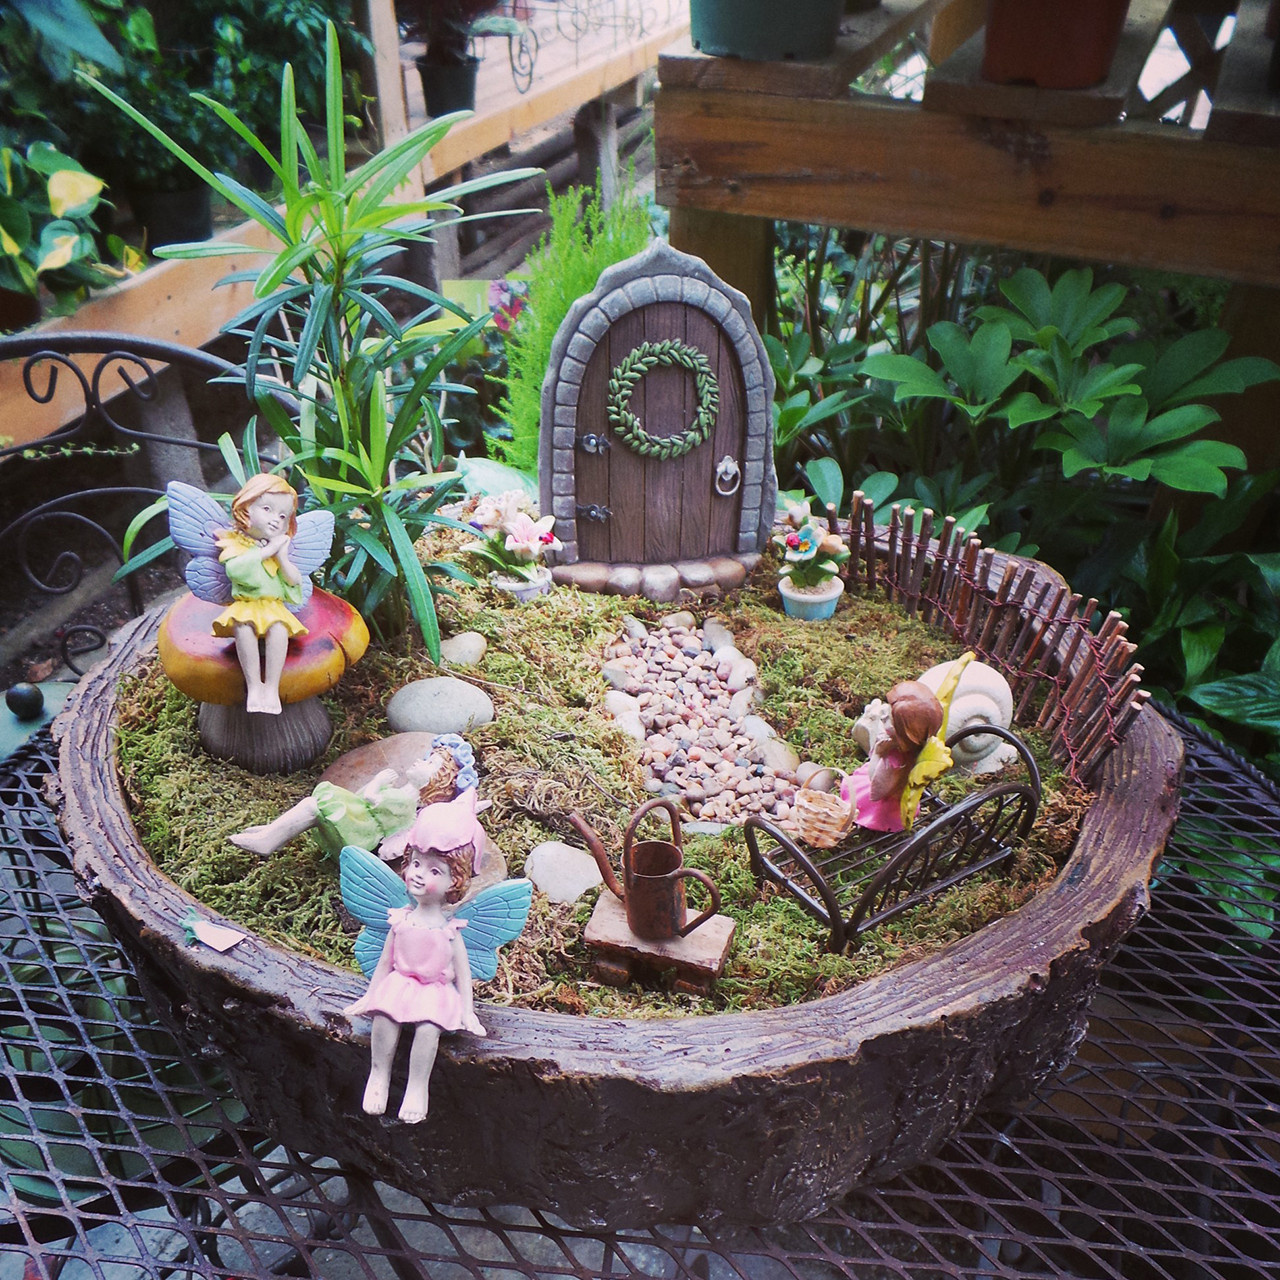 Best ideas about Miniature Fairy Garden Ideas DIY
. Save or Pin The 50 Best DIY Miniature Fairy Garden Ideas in 2016 Now.